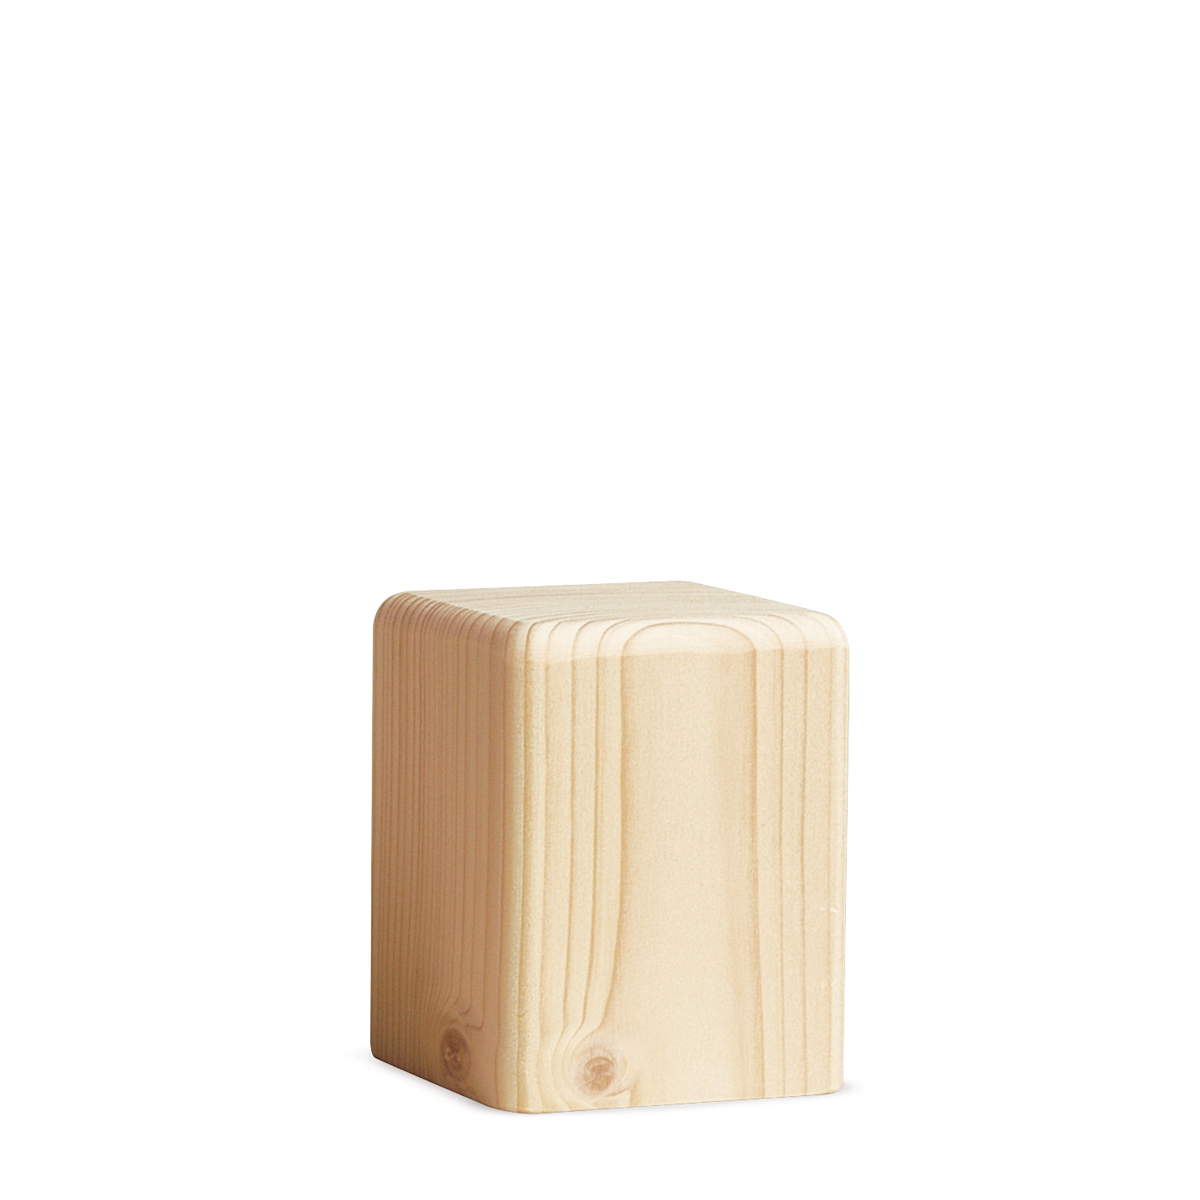 Block medium, Height 8 cm, natural wood